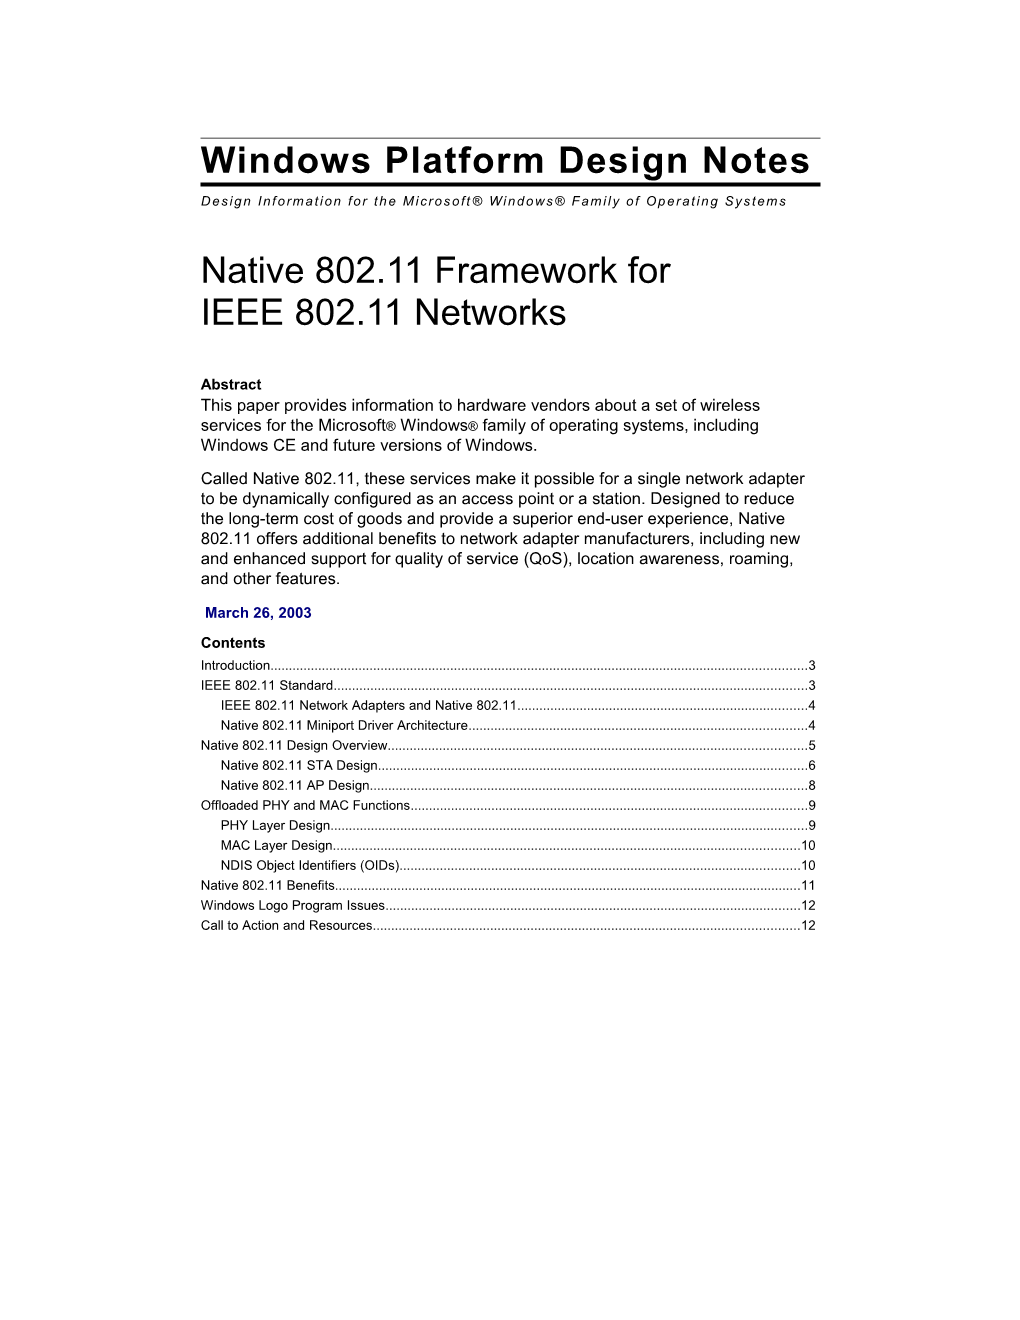 Native 802.11 Framework for IEEE 802.11 Networks